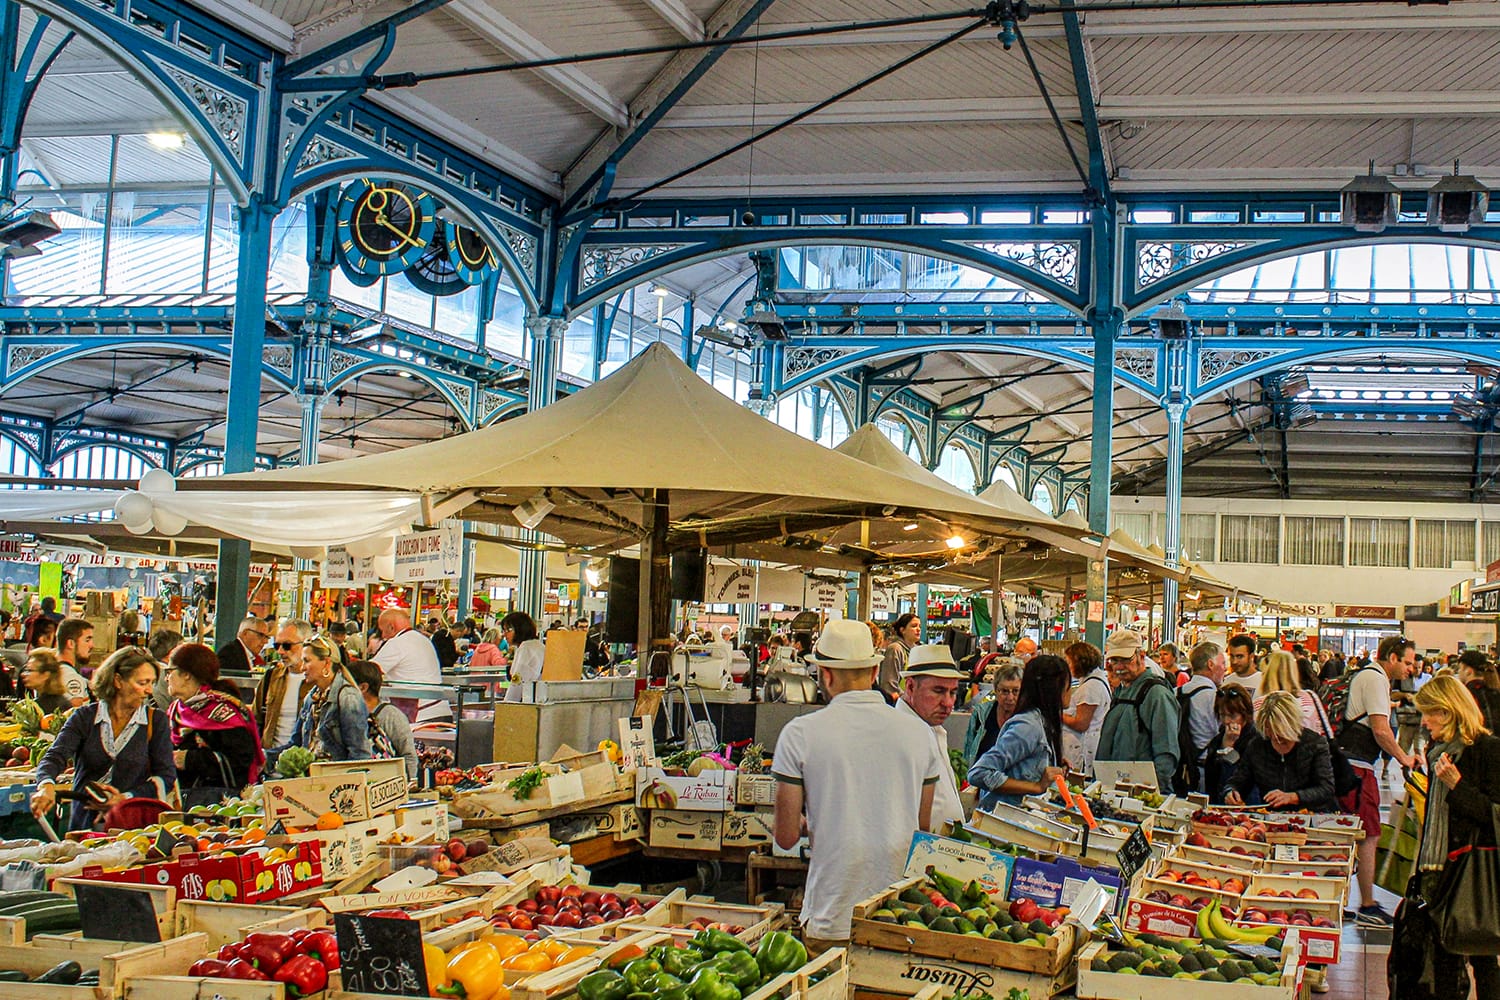 Les Halles, the covered market in Dijon, France